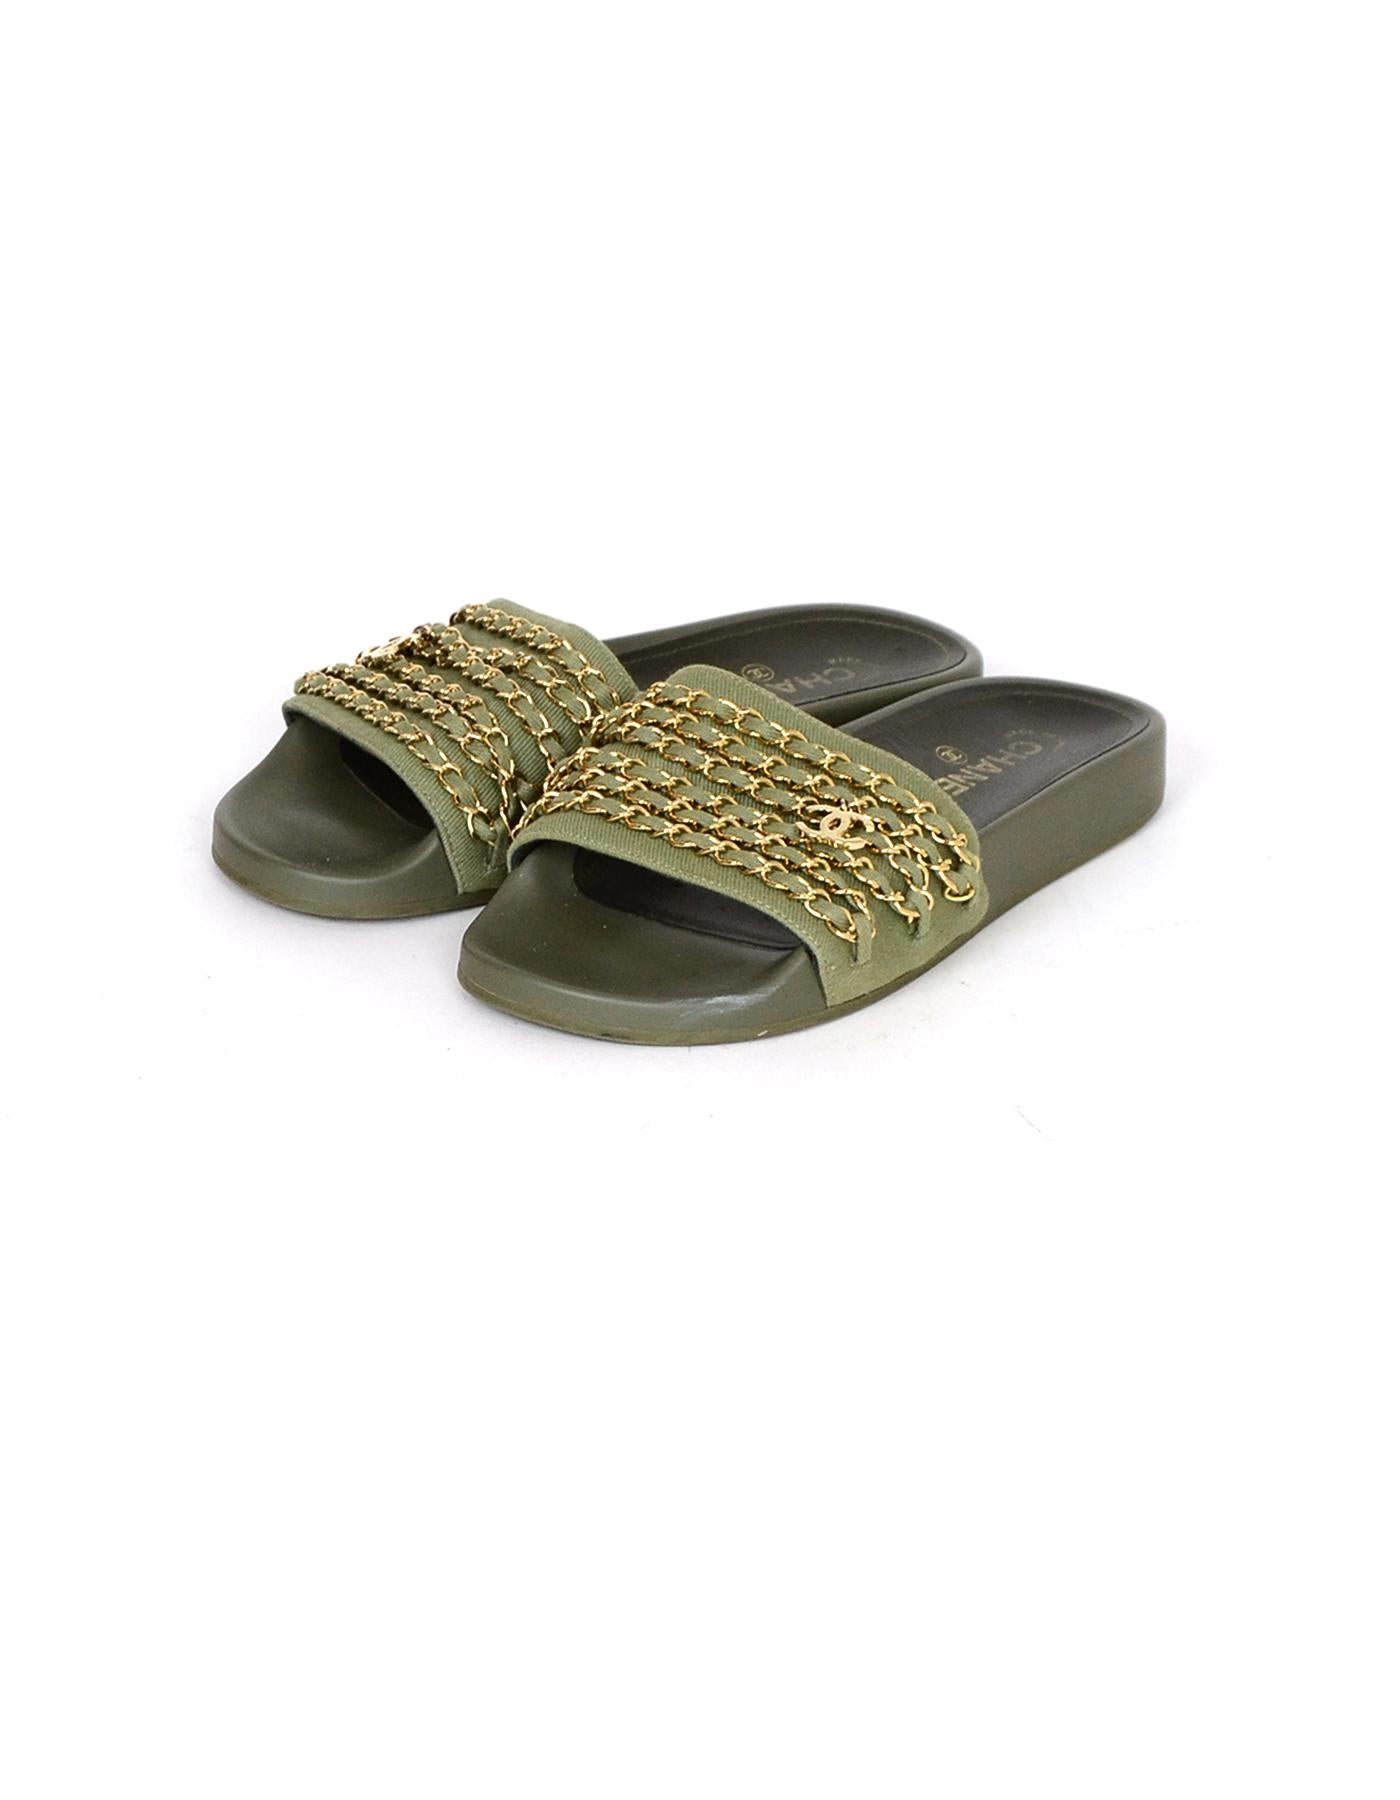 chain slide sandals